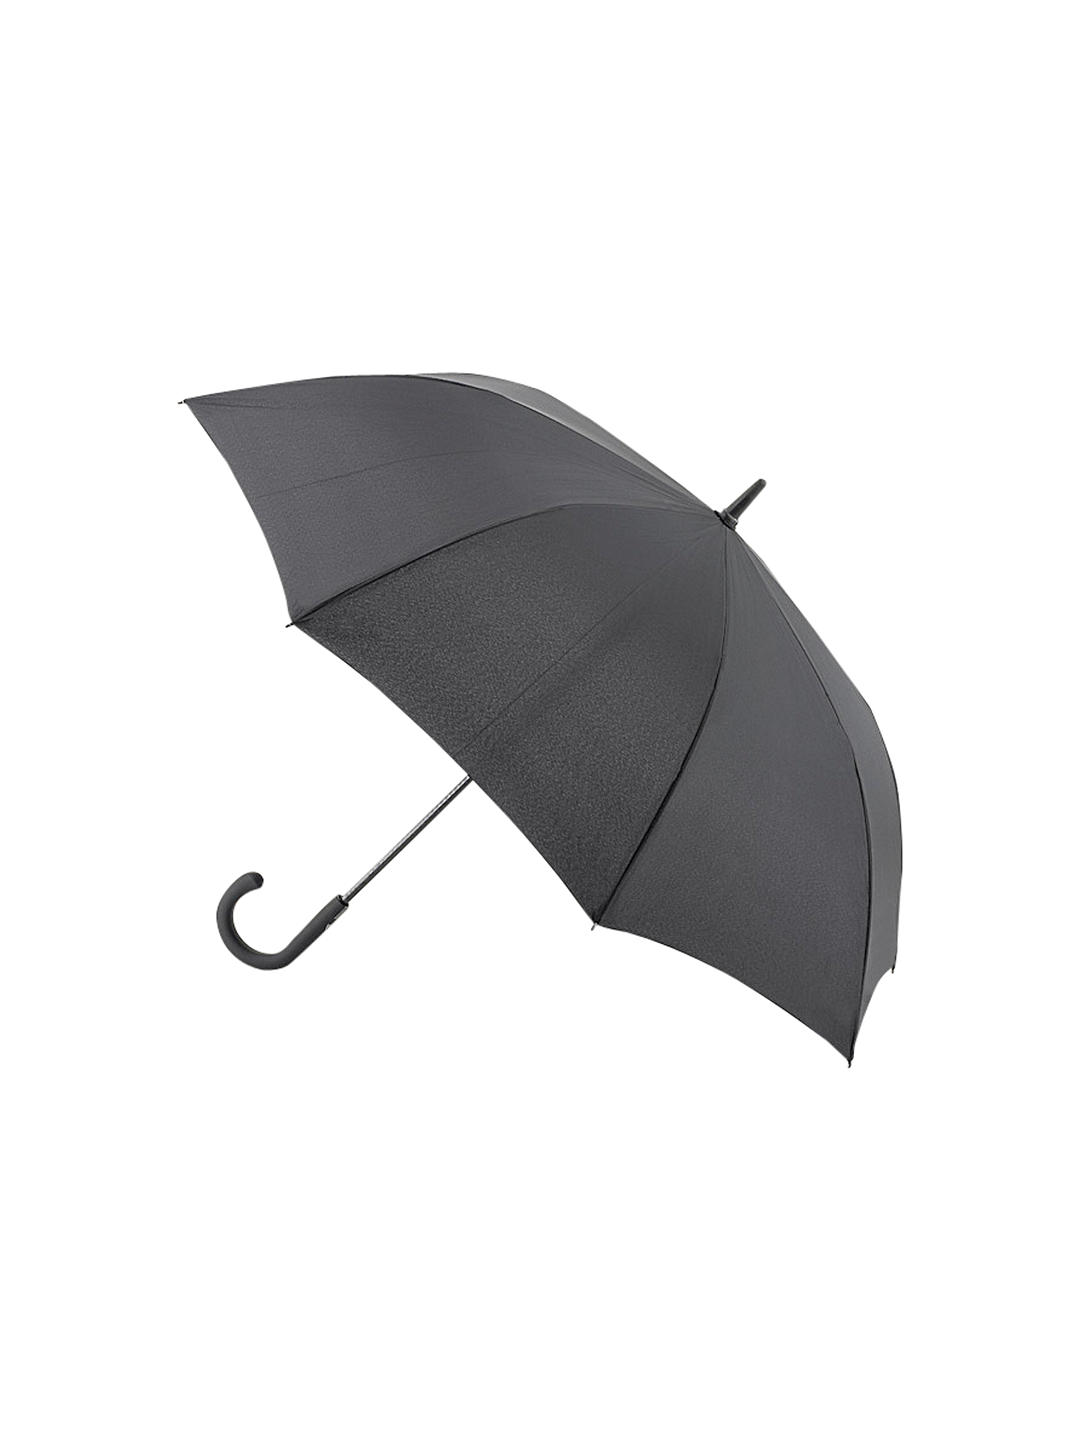 Fulton G828 Knightsbridge 1 Walking Umbrella, Black